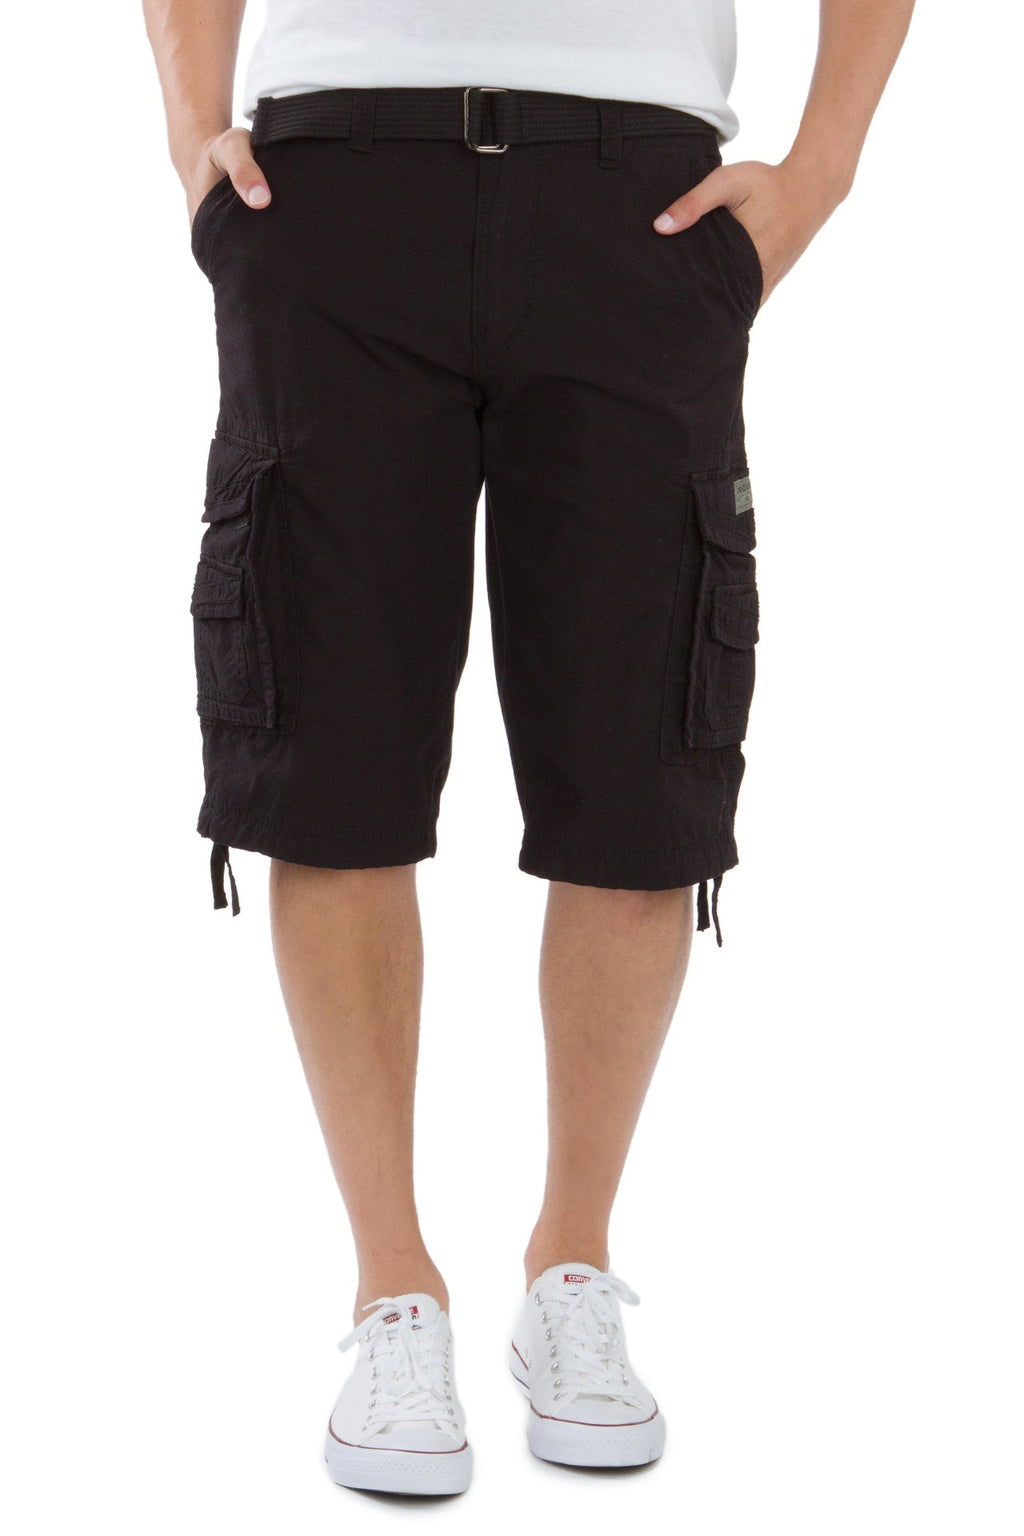 Cargo Shorts for Men - UNIONBAY's Best Selection